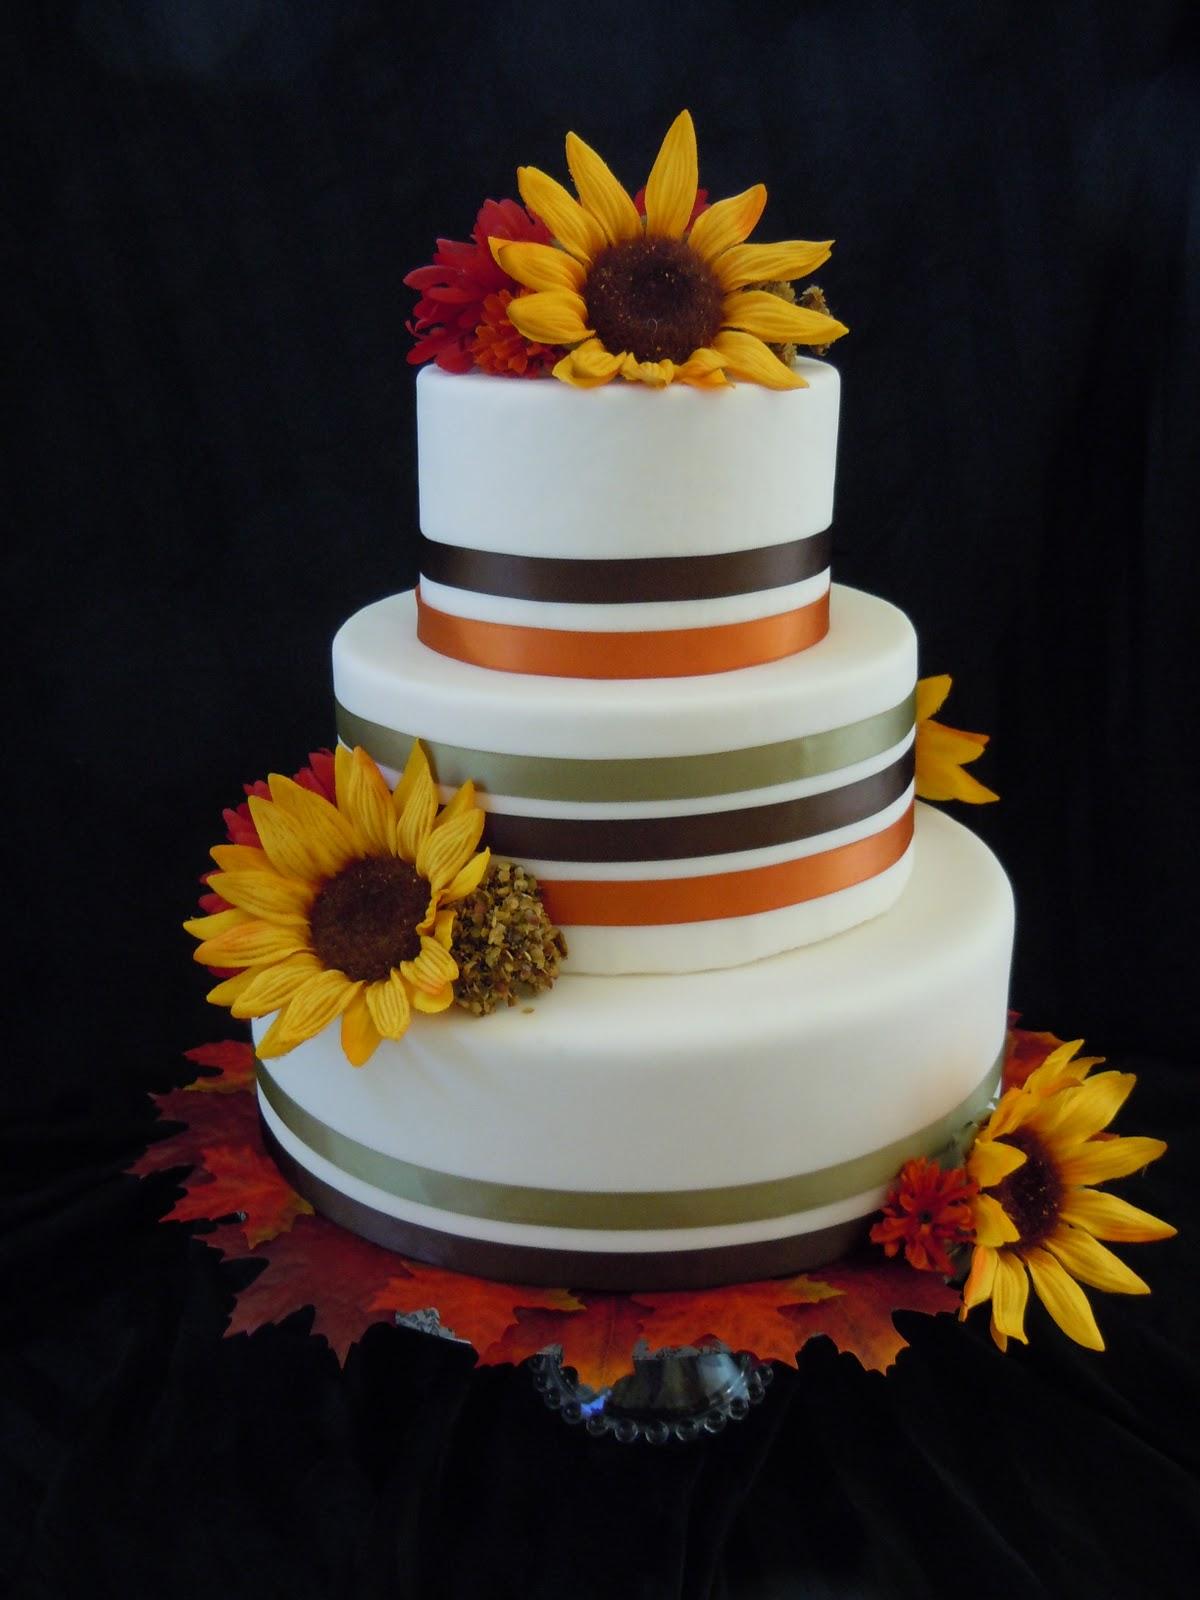 Crewelwork Wedding Cake. marthastewartweddings.com